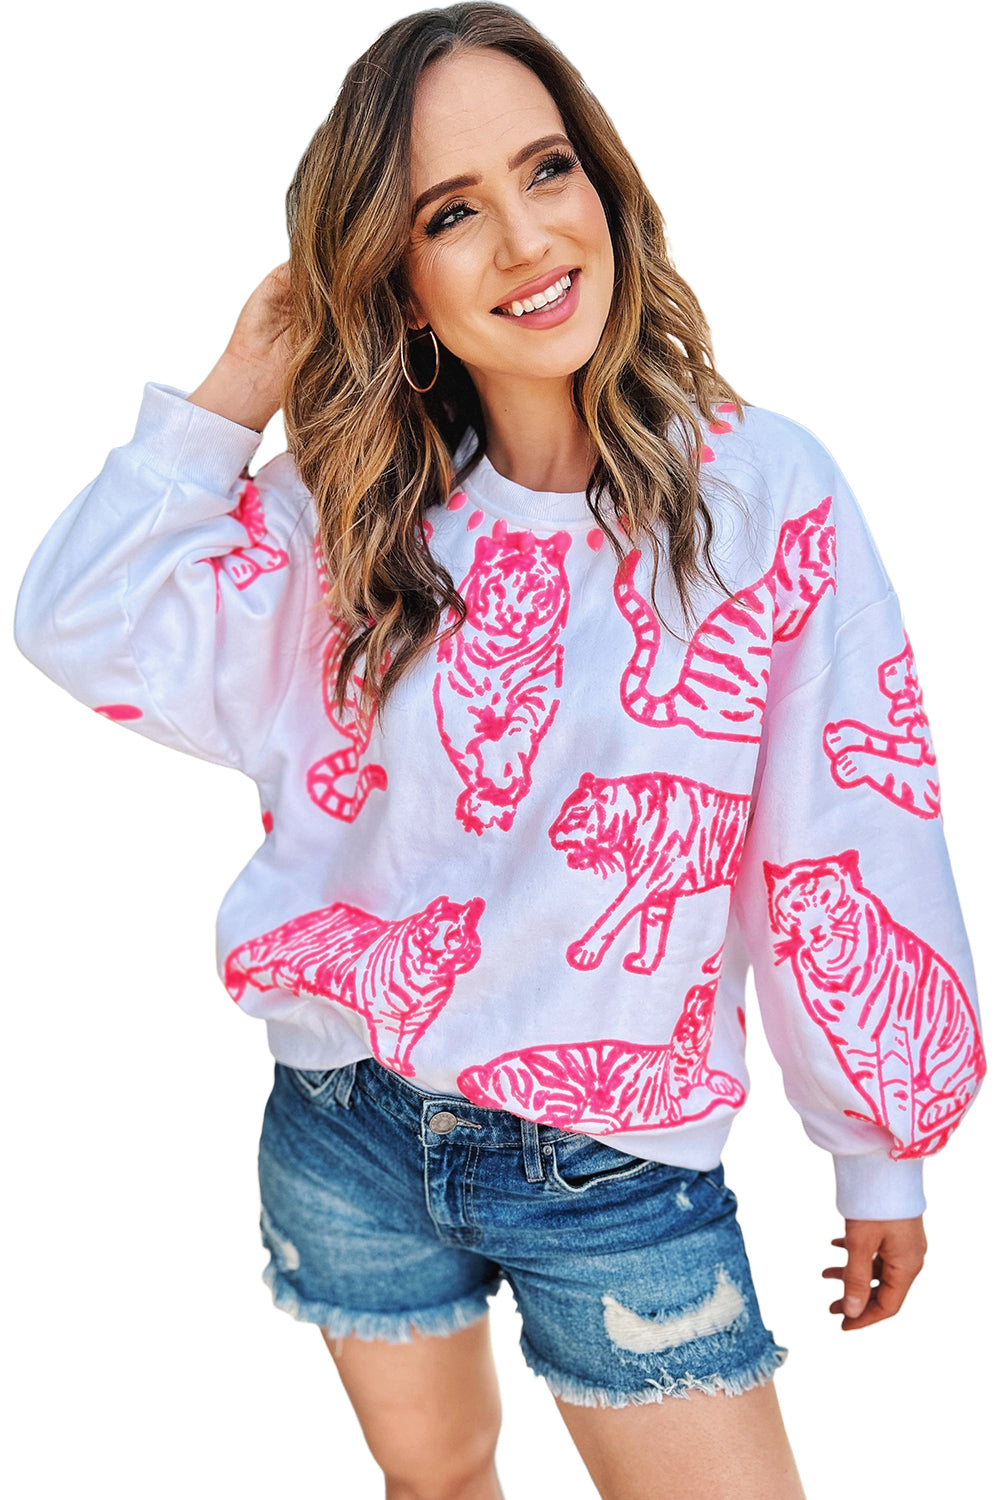 Hellweiß-rosafarbenes Pullover-Sweatshirt mit Animal-Print